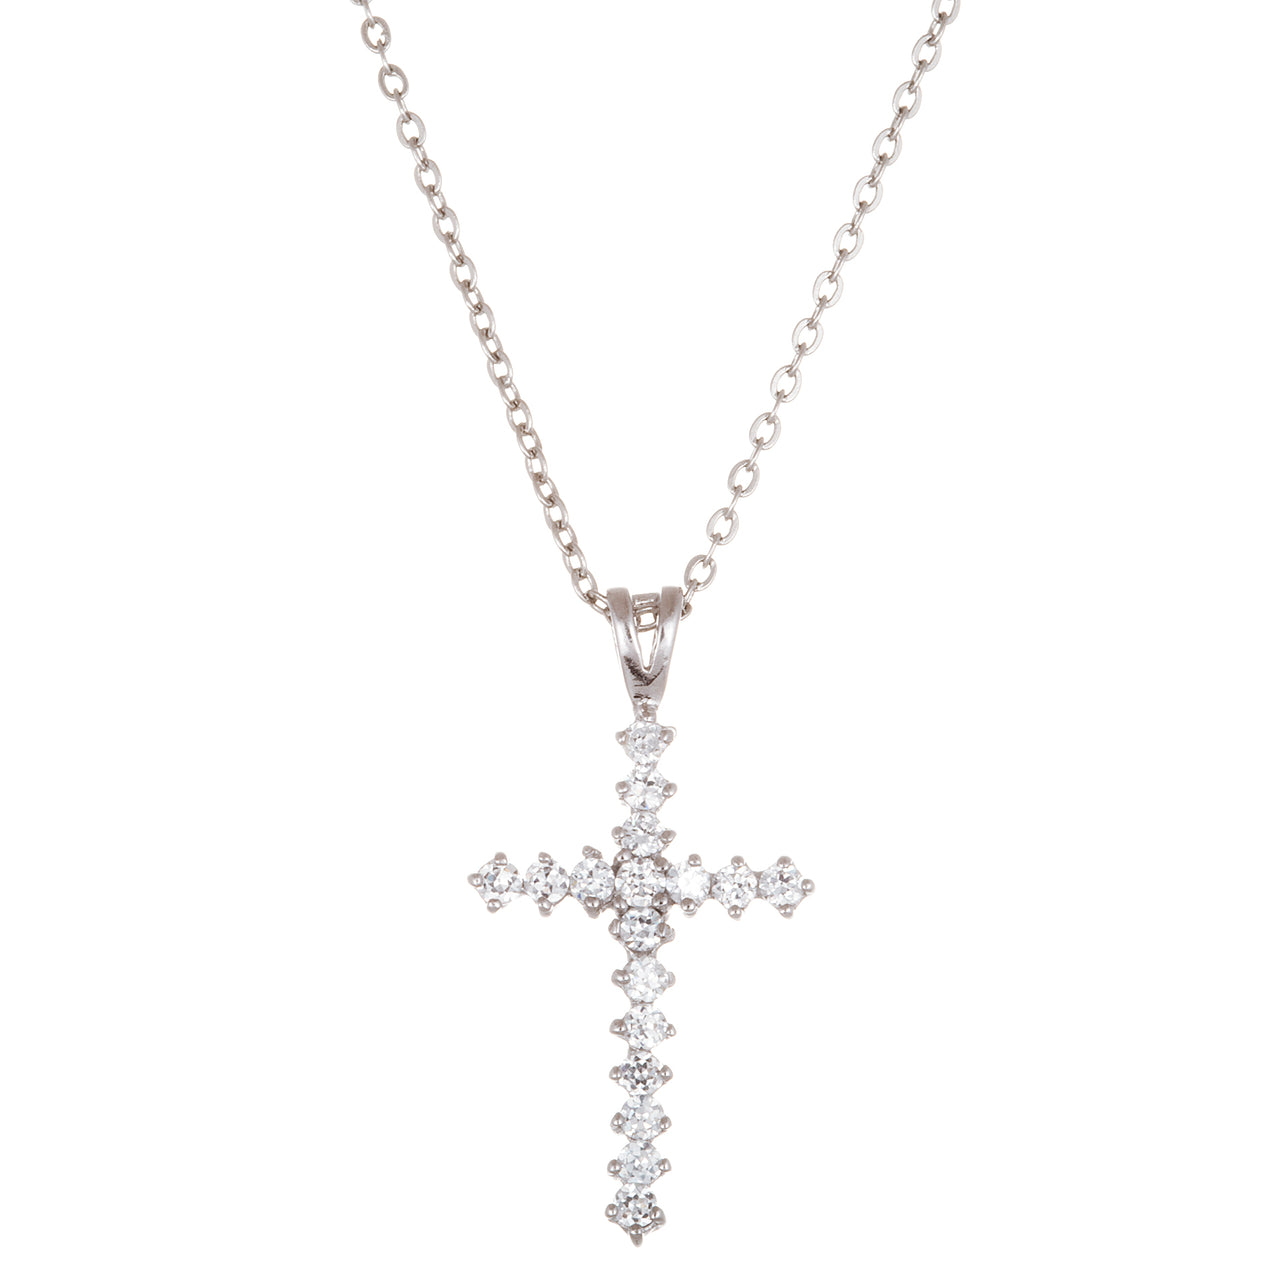 Sterling Silver Cubic Zirconia Big Cross Pendant Necklace